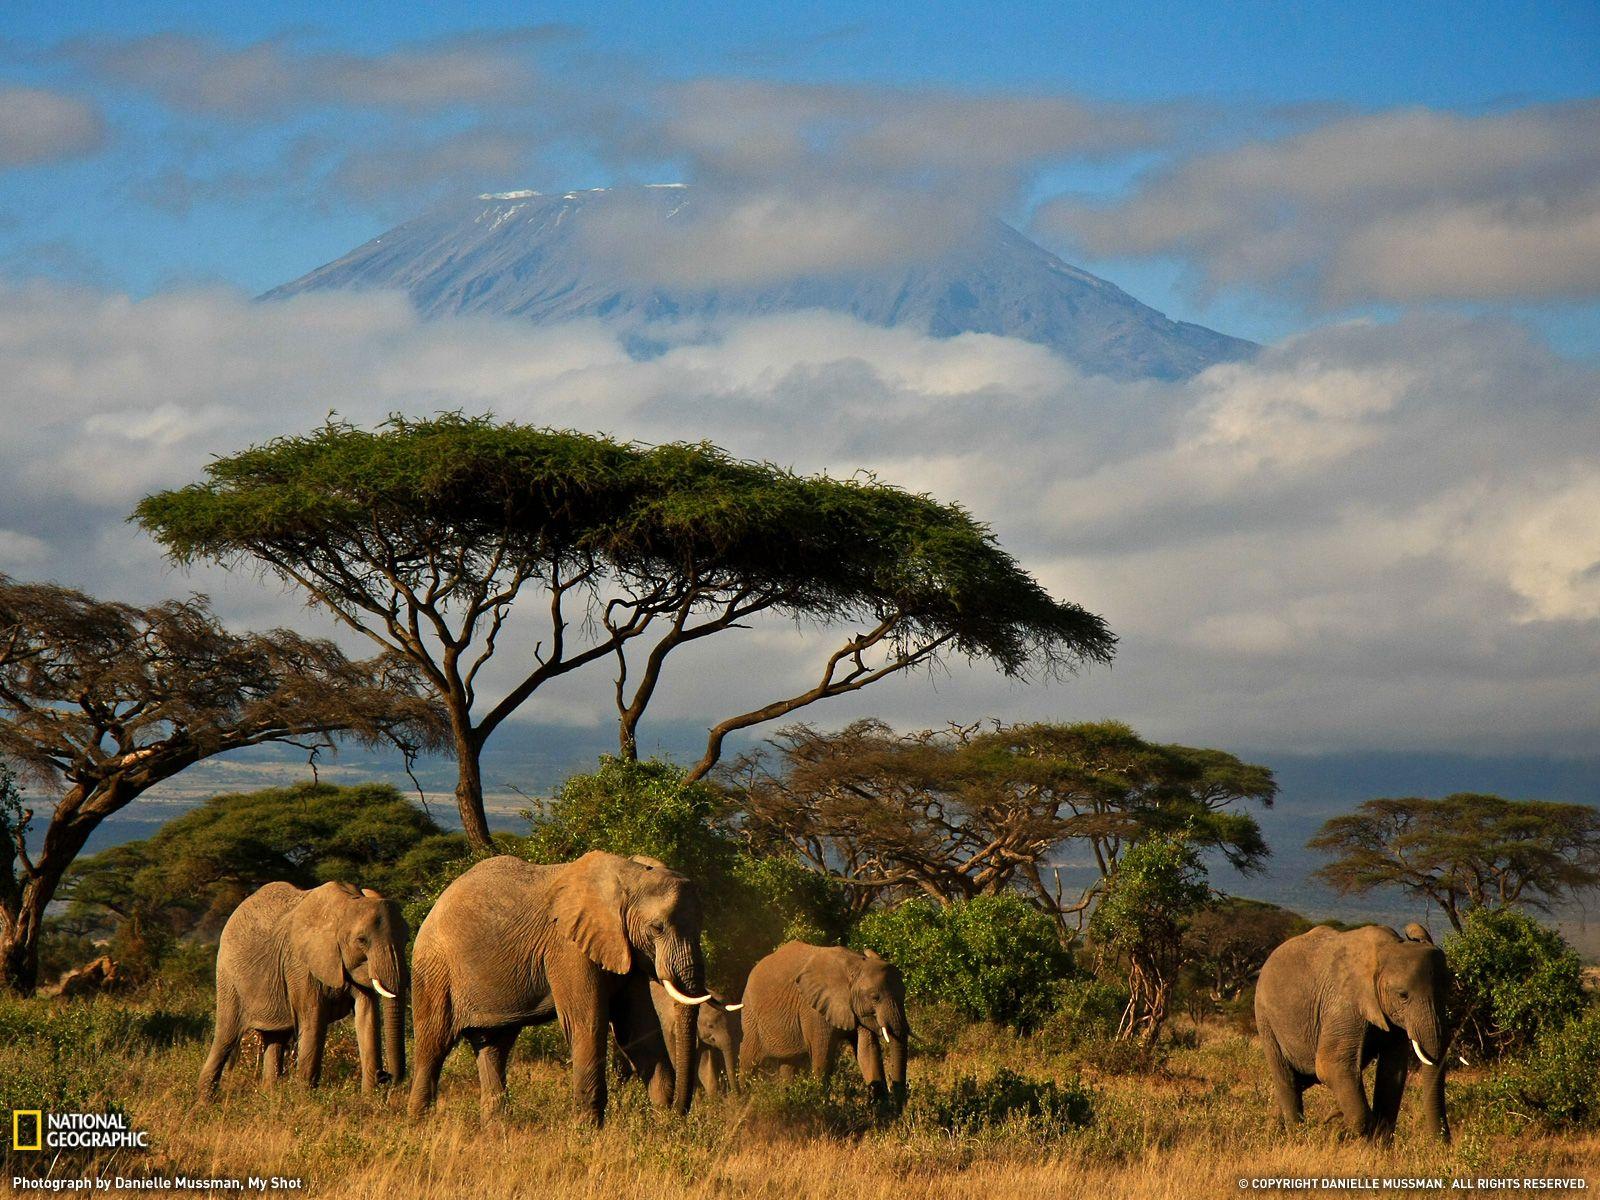 Photo of the Day. animals. Tanzania safari, Elephant